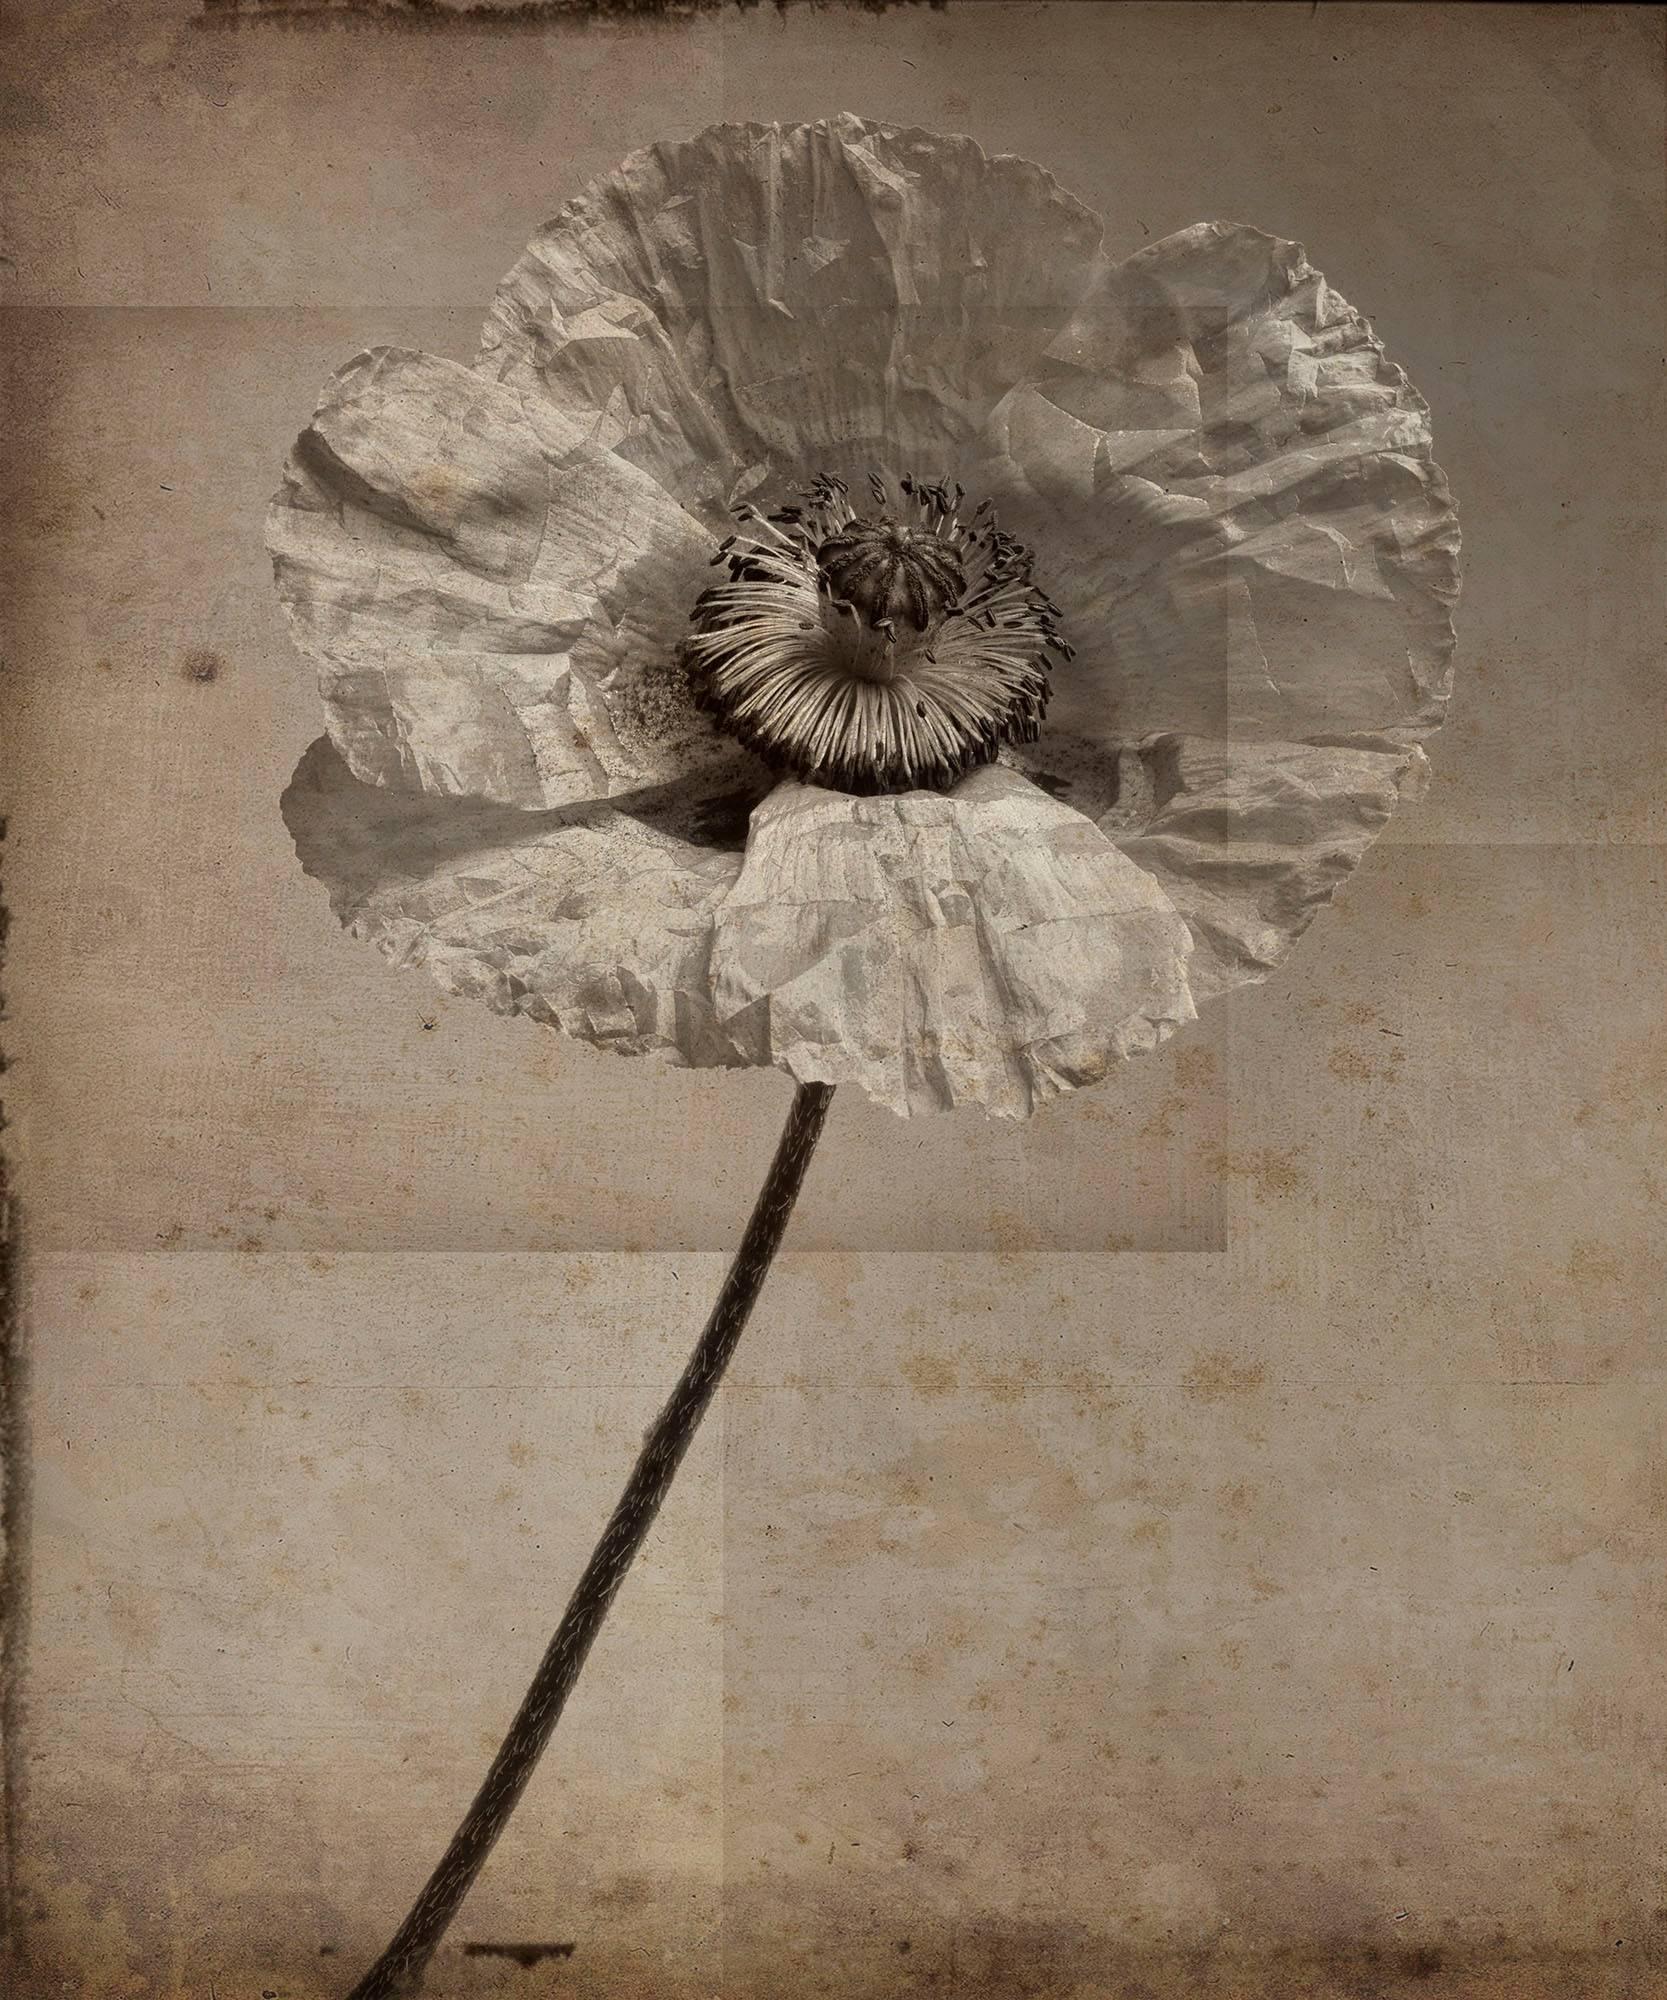 David Seiler Still-Life Photograph - Poppy #4 (Modern, Sepia Toned Photo Collage on Wood of Single Poppy Flower)